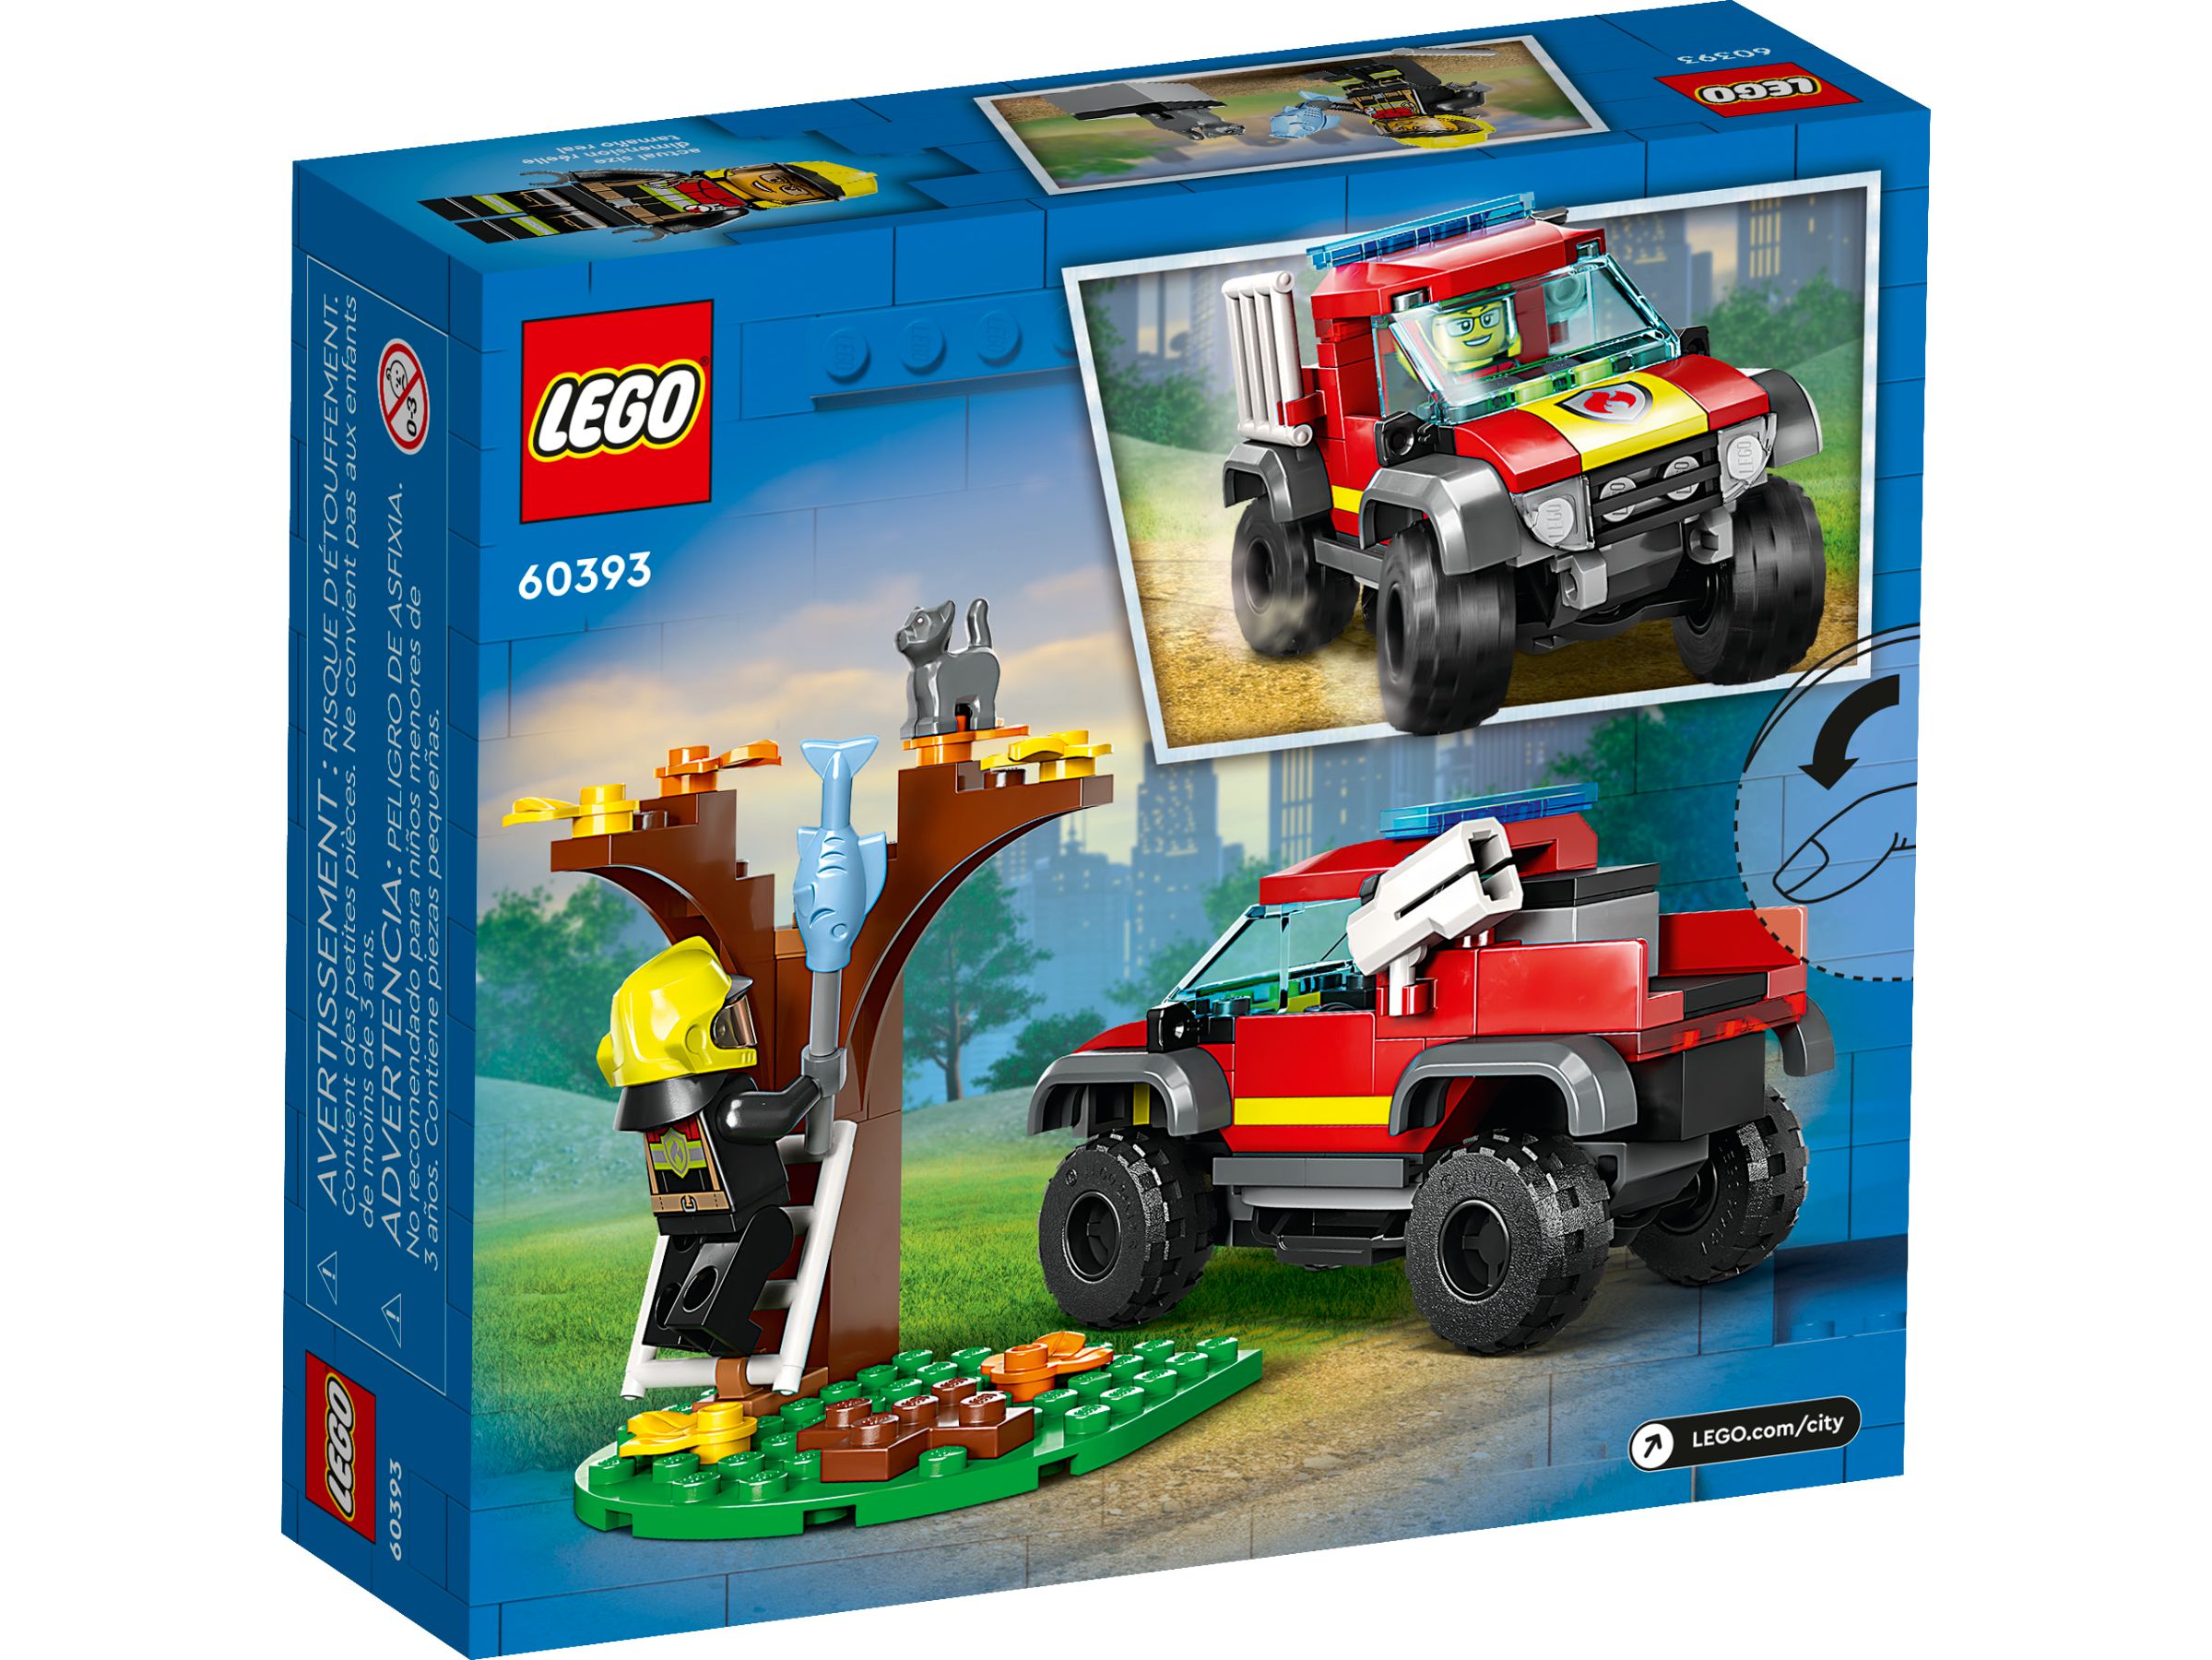 LEGO City 60393 Feuerwehr-Pickup LEGO_60393_alt5.jpg